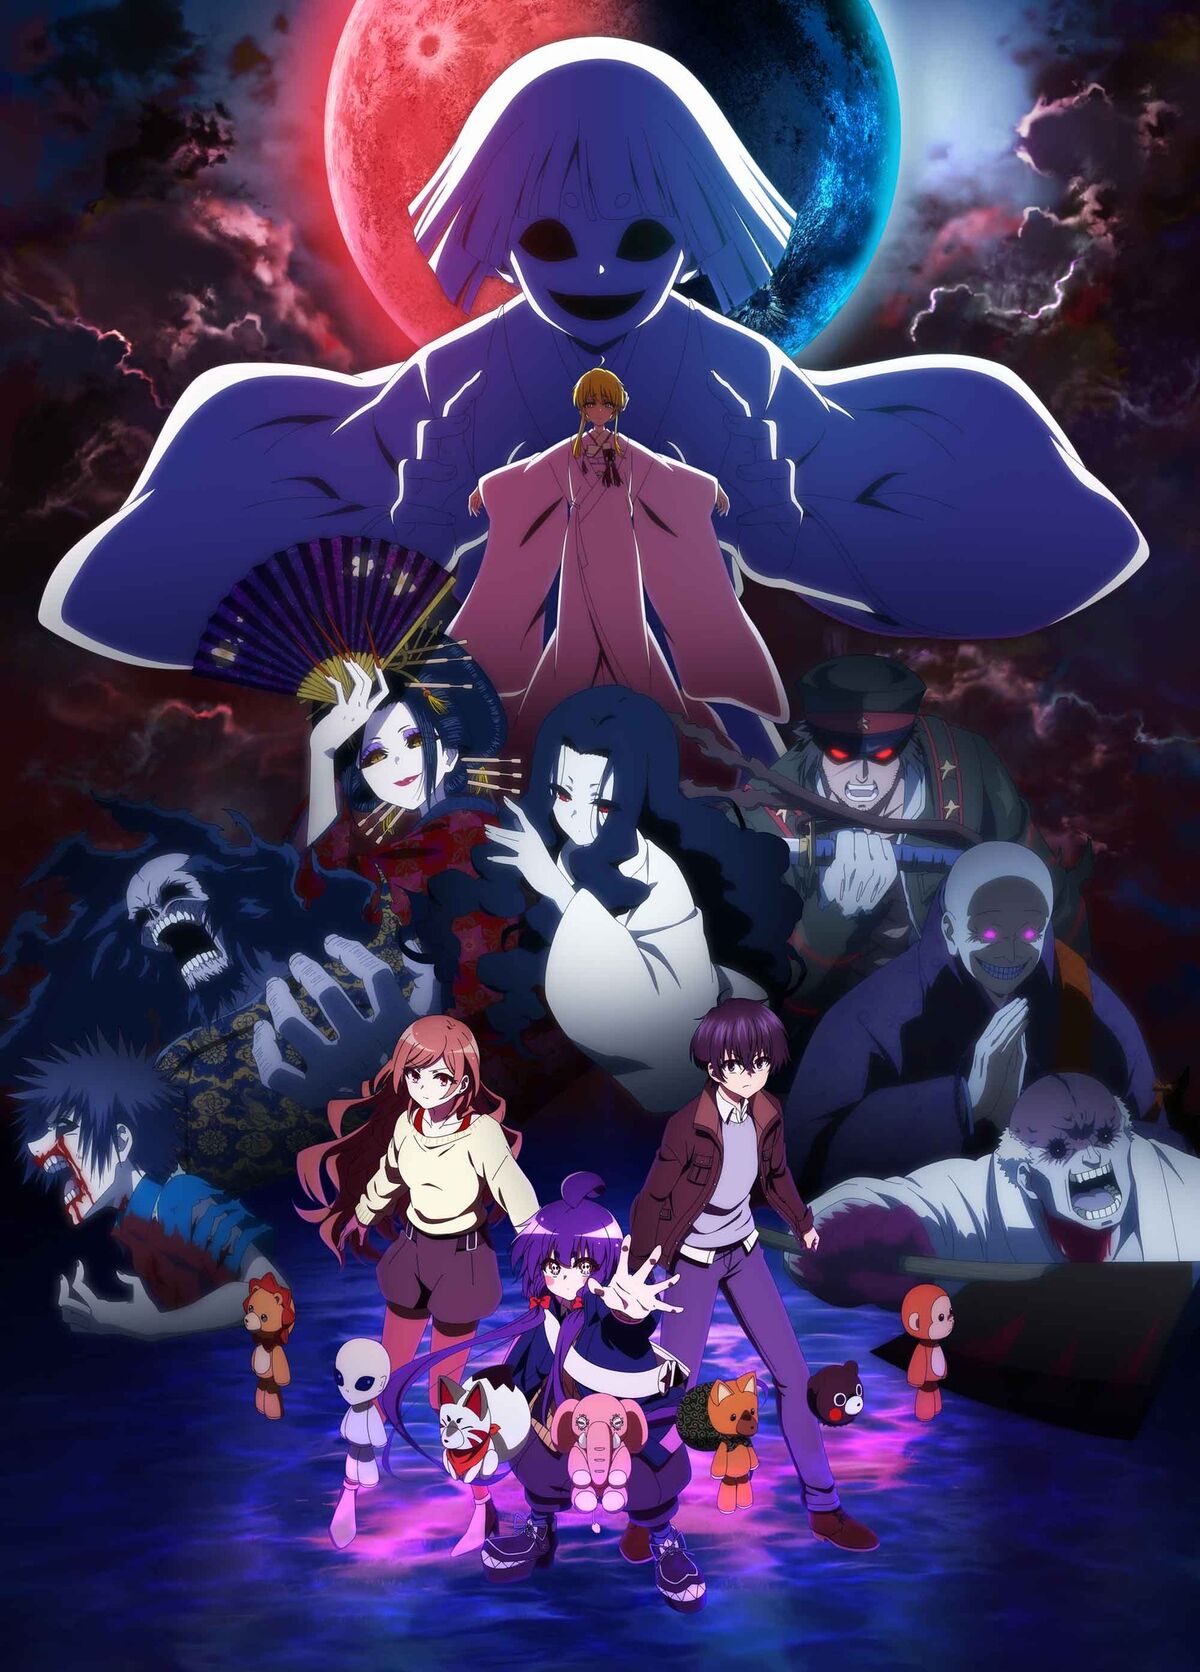 Dark anime - Dark anime updated their cover photo.